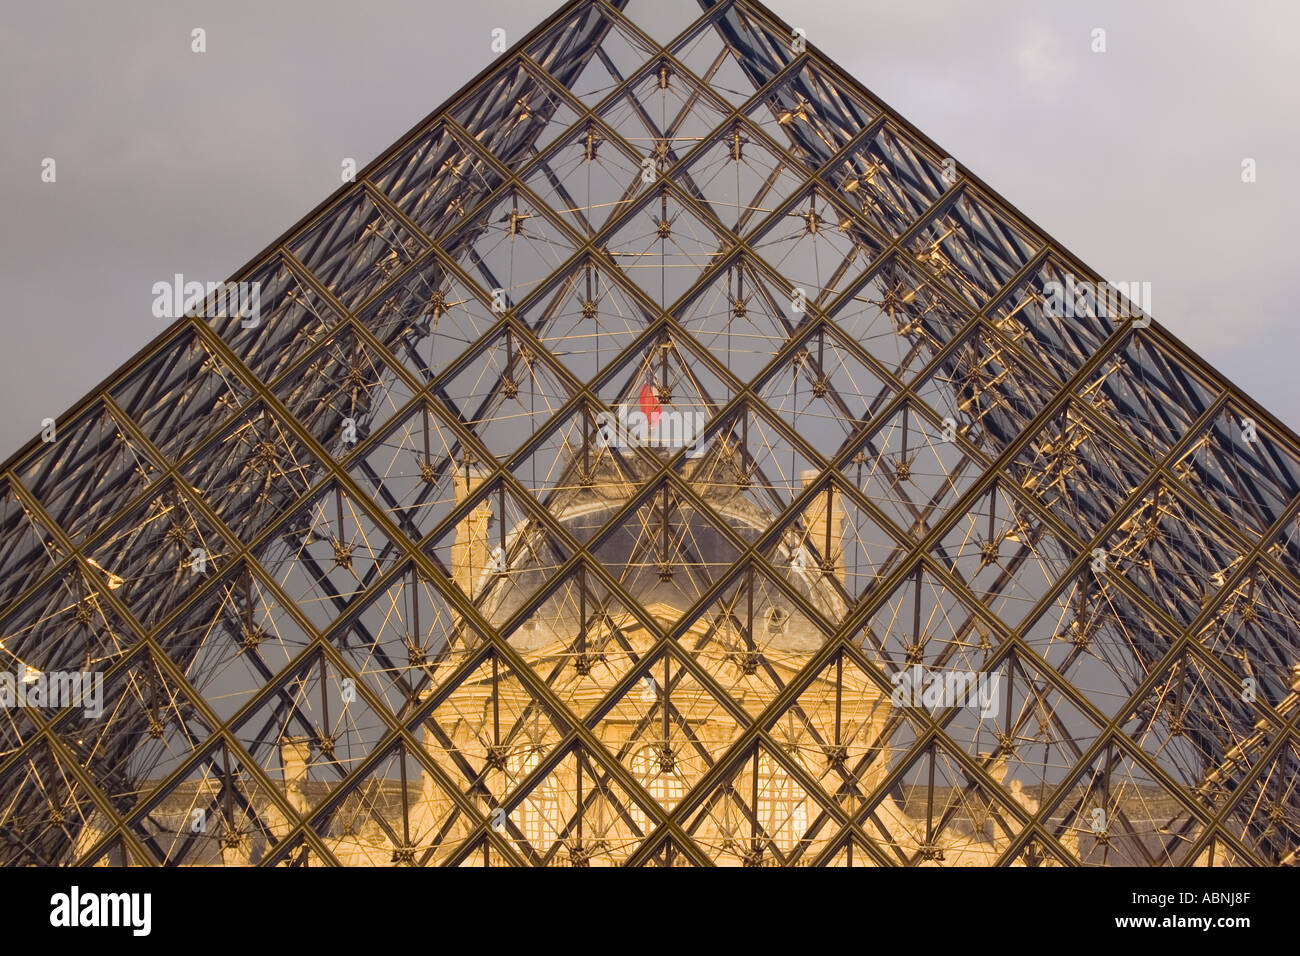 Pyramid at Musee du Louvre Paris France Stock Photo